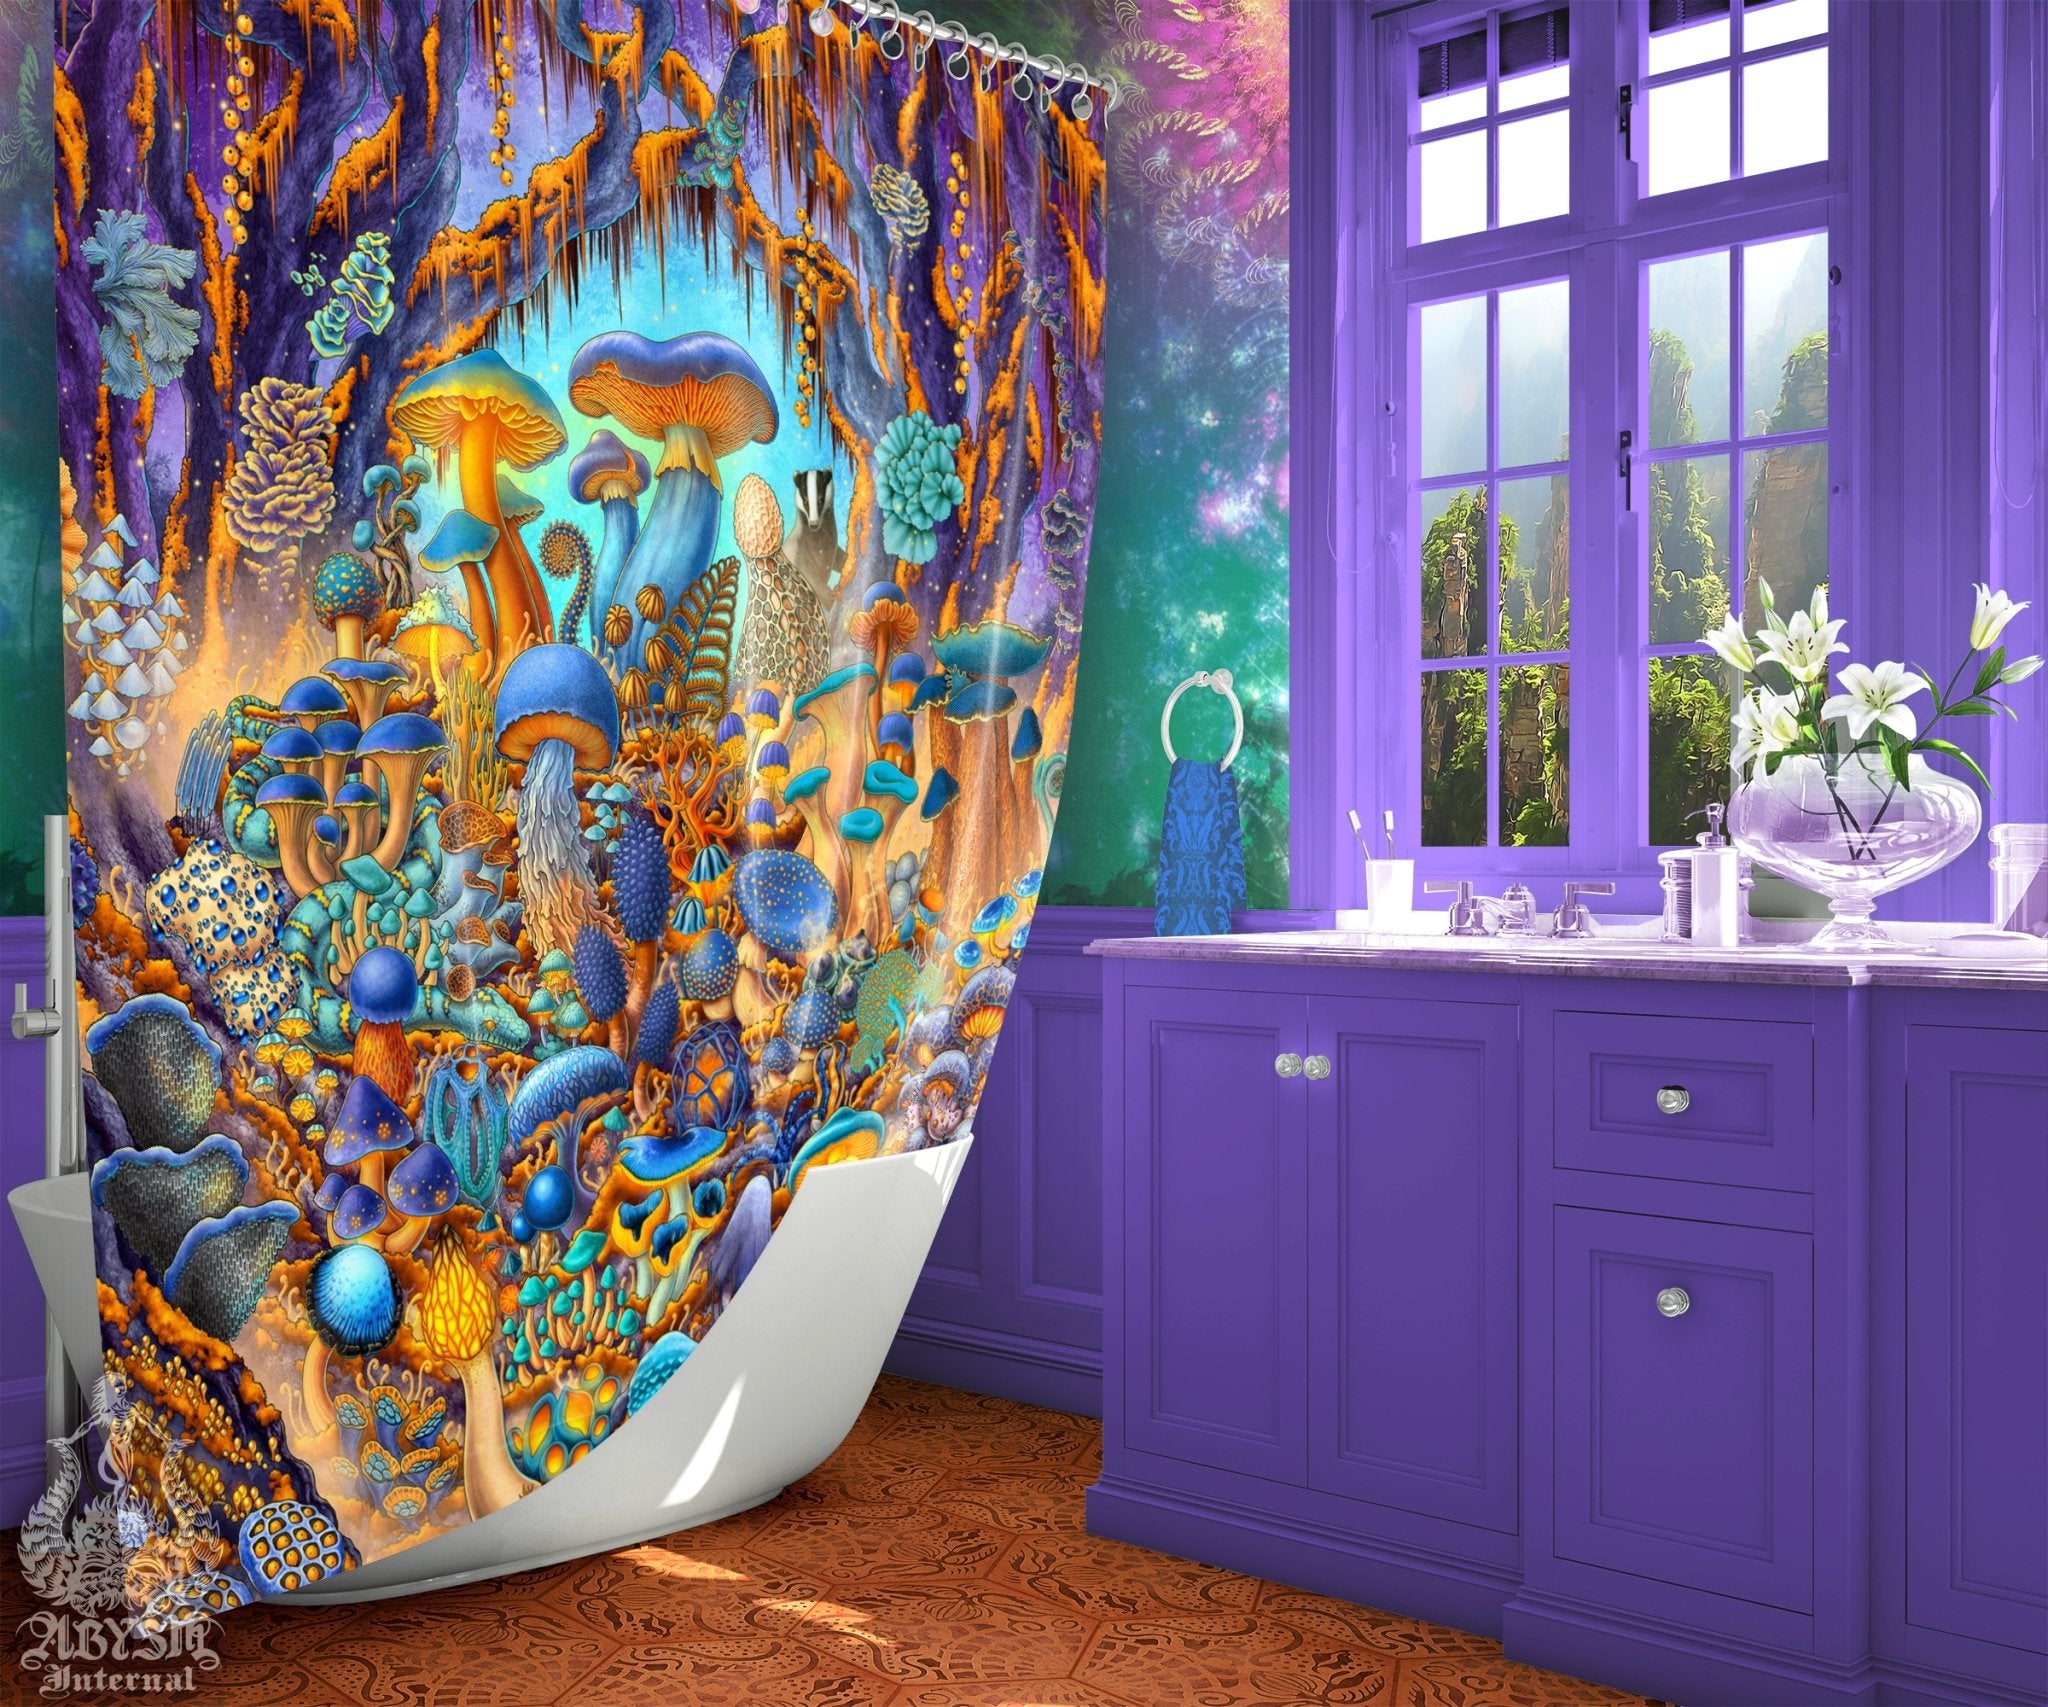 Mushrooms Shower Curtain, Kids Bathroom Decor, Fantasy Home Art, Mycology Print, Mycologist Gift - Magic Shrooms, Cyan and Gold - Abysm Internal